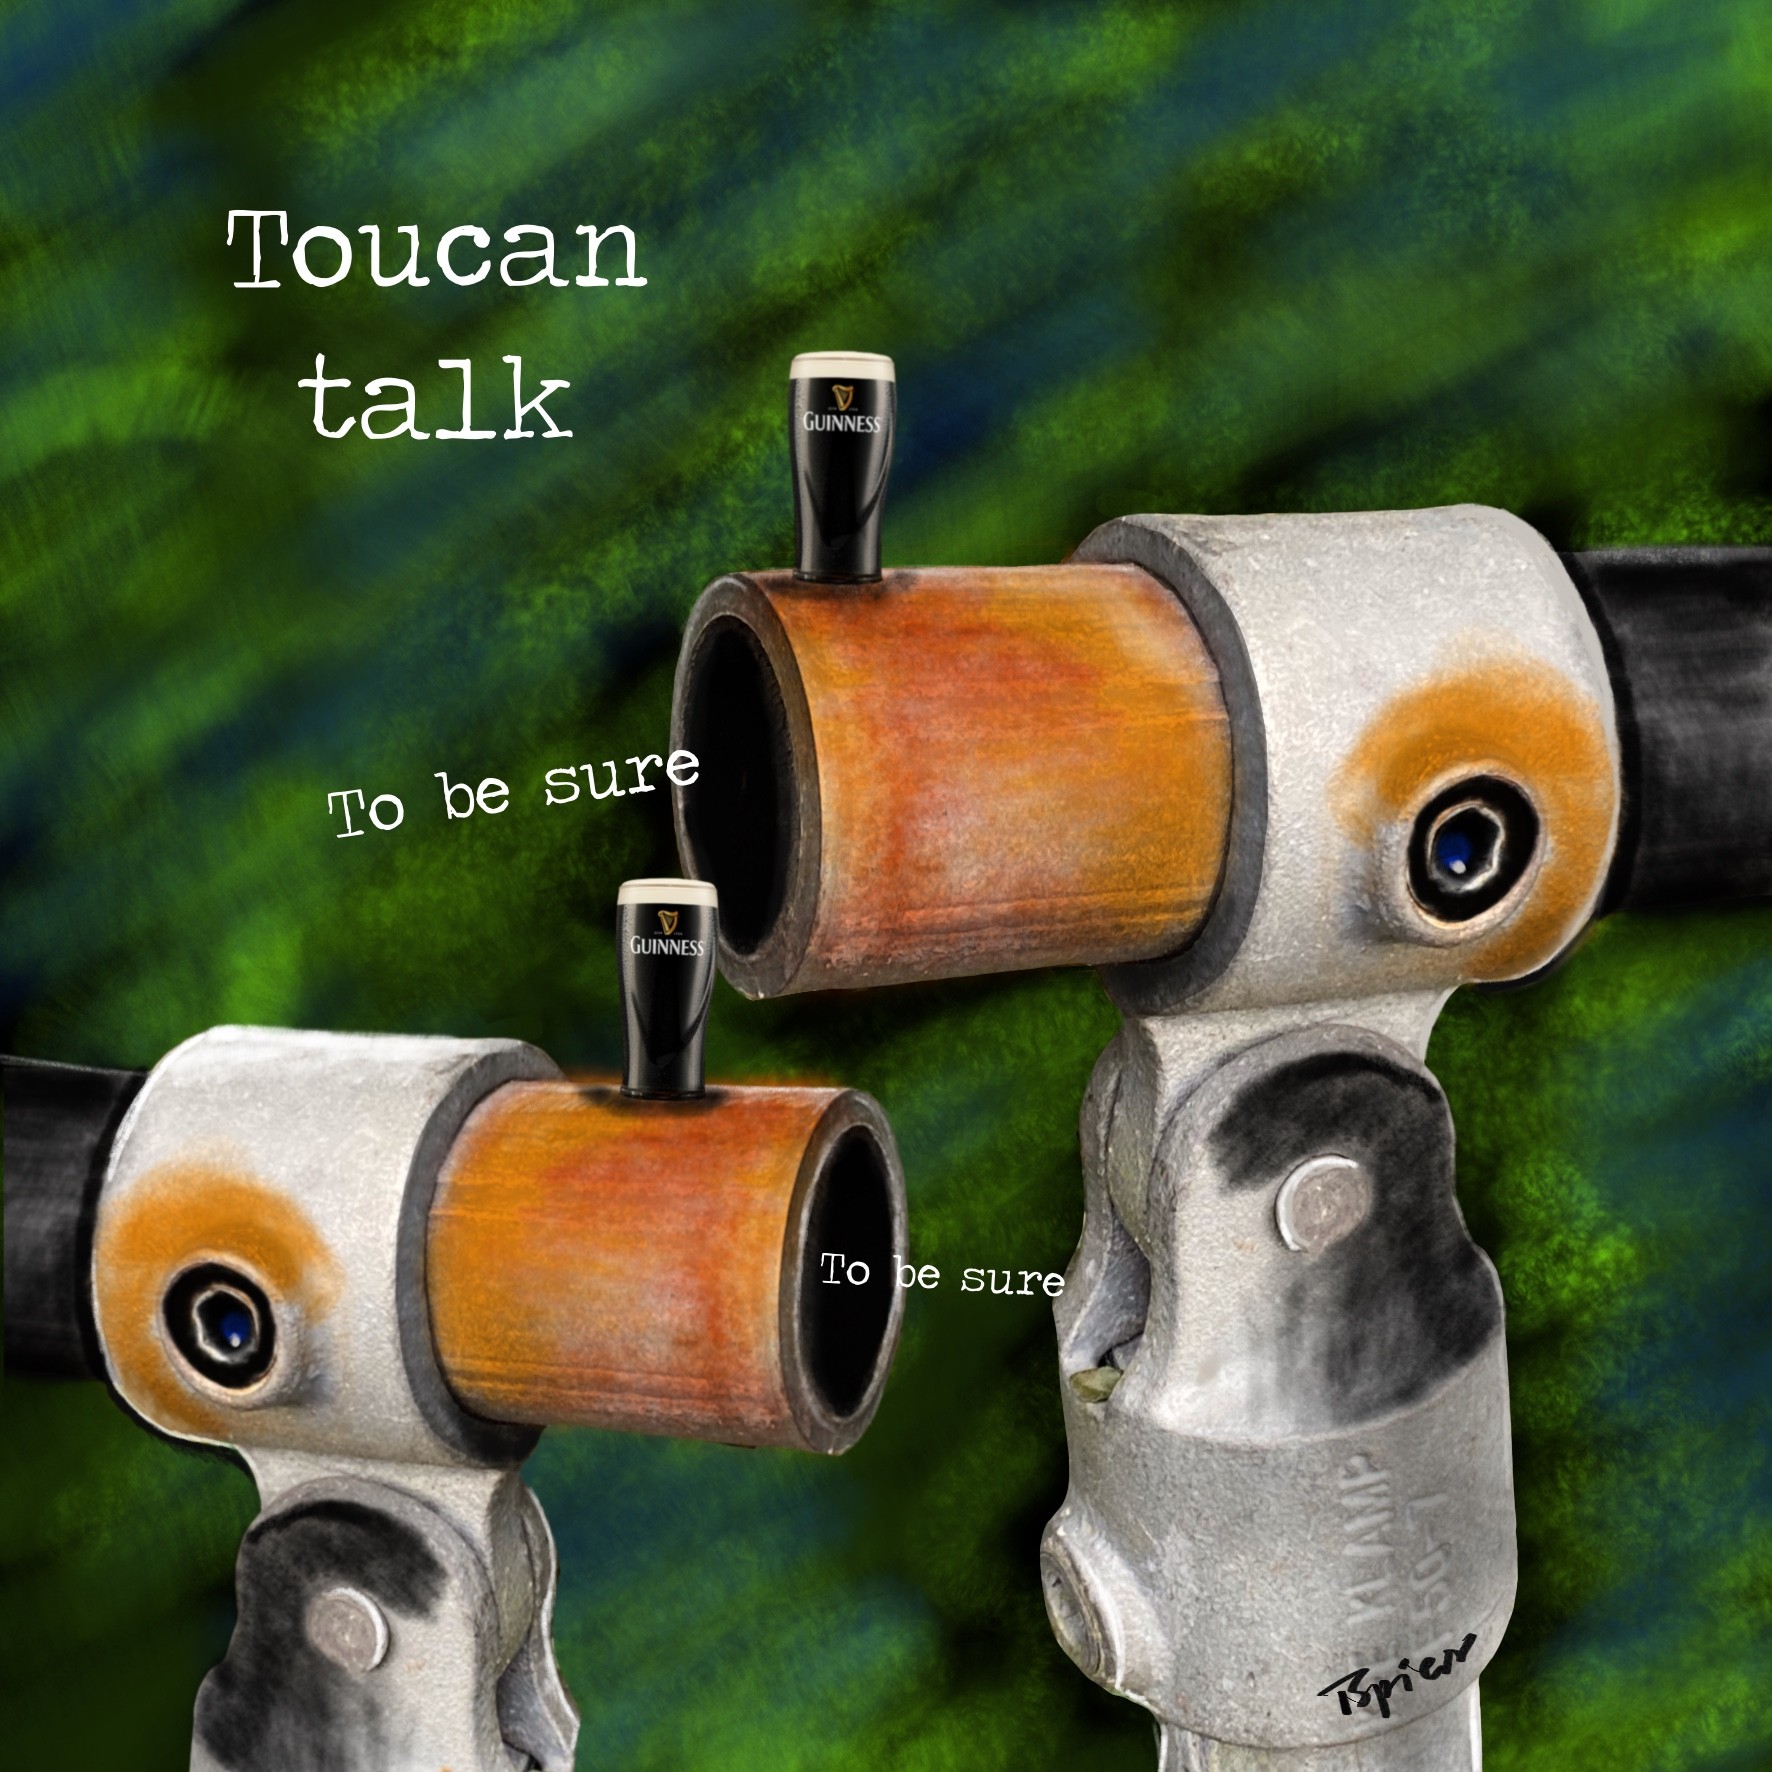 Toucan talk